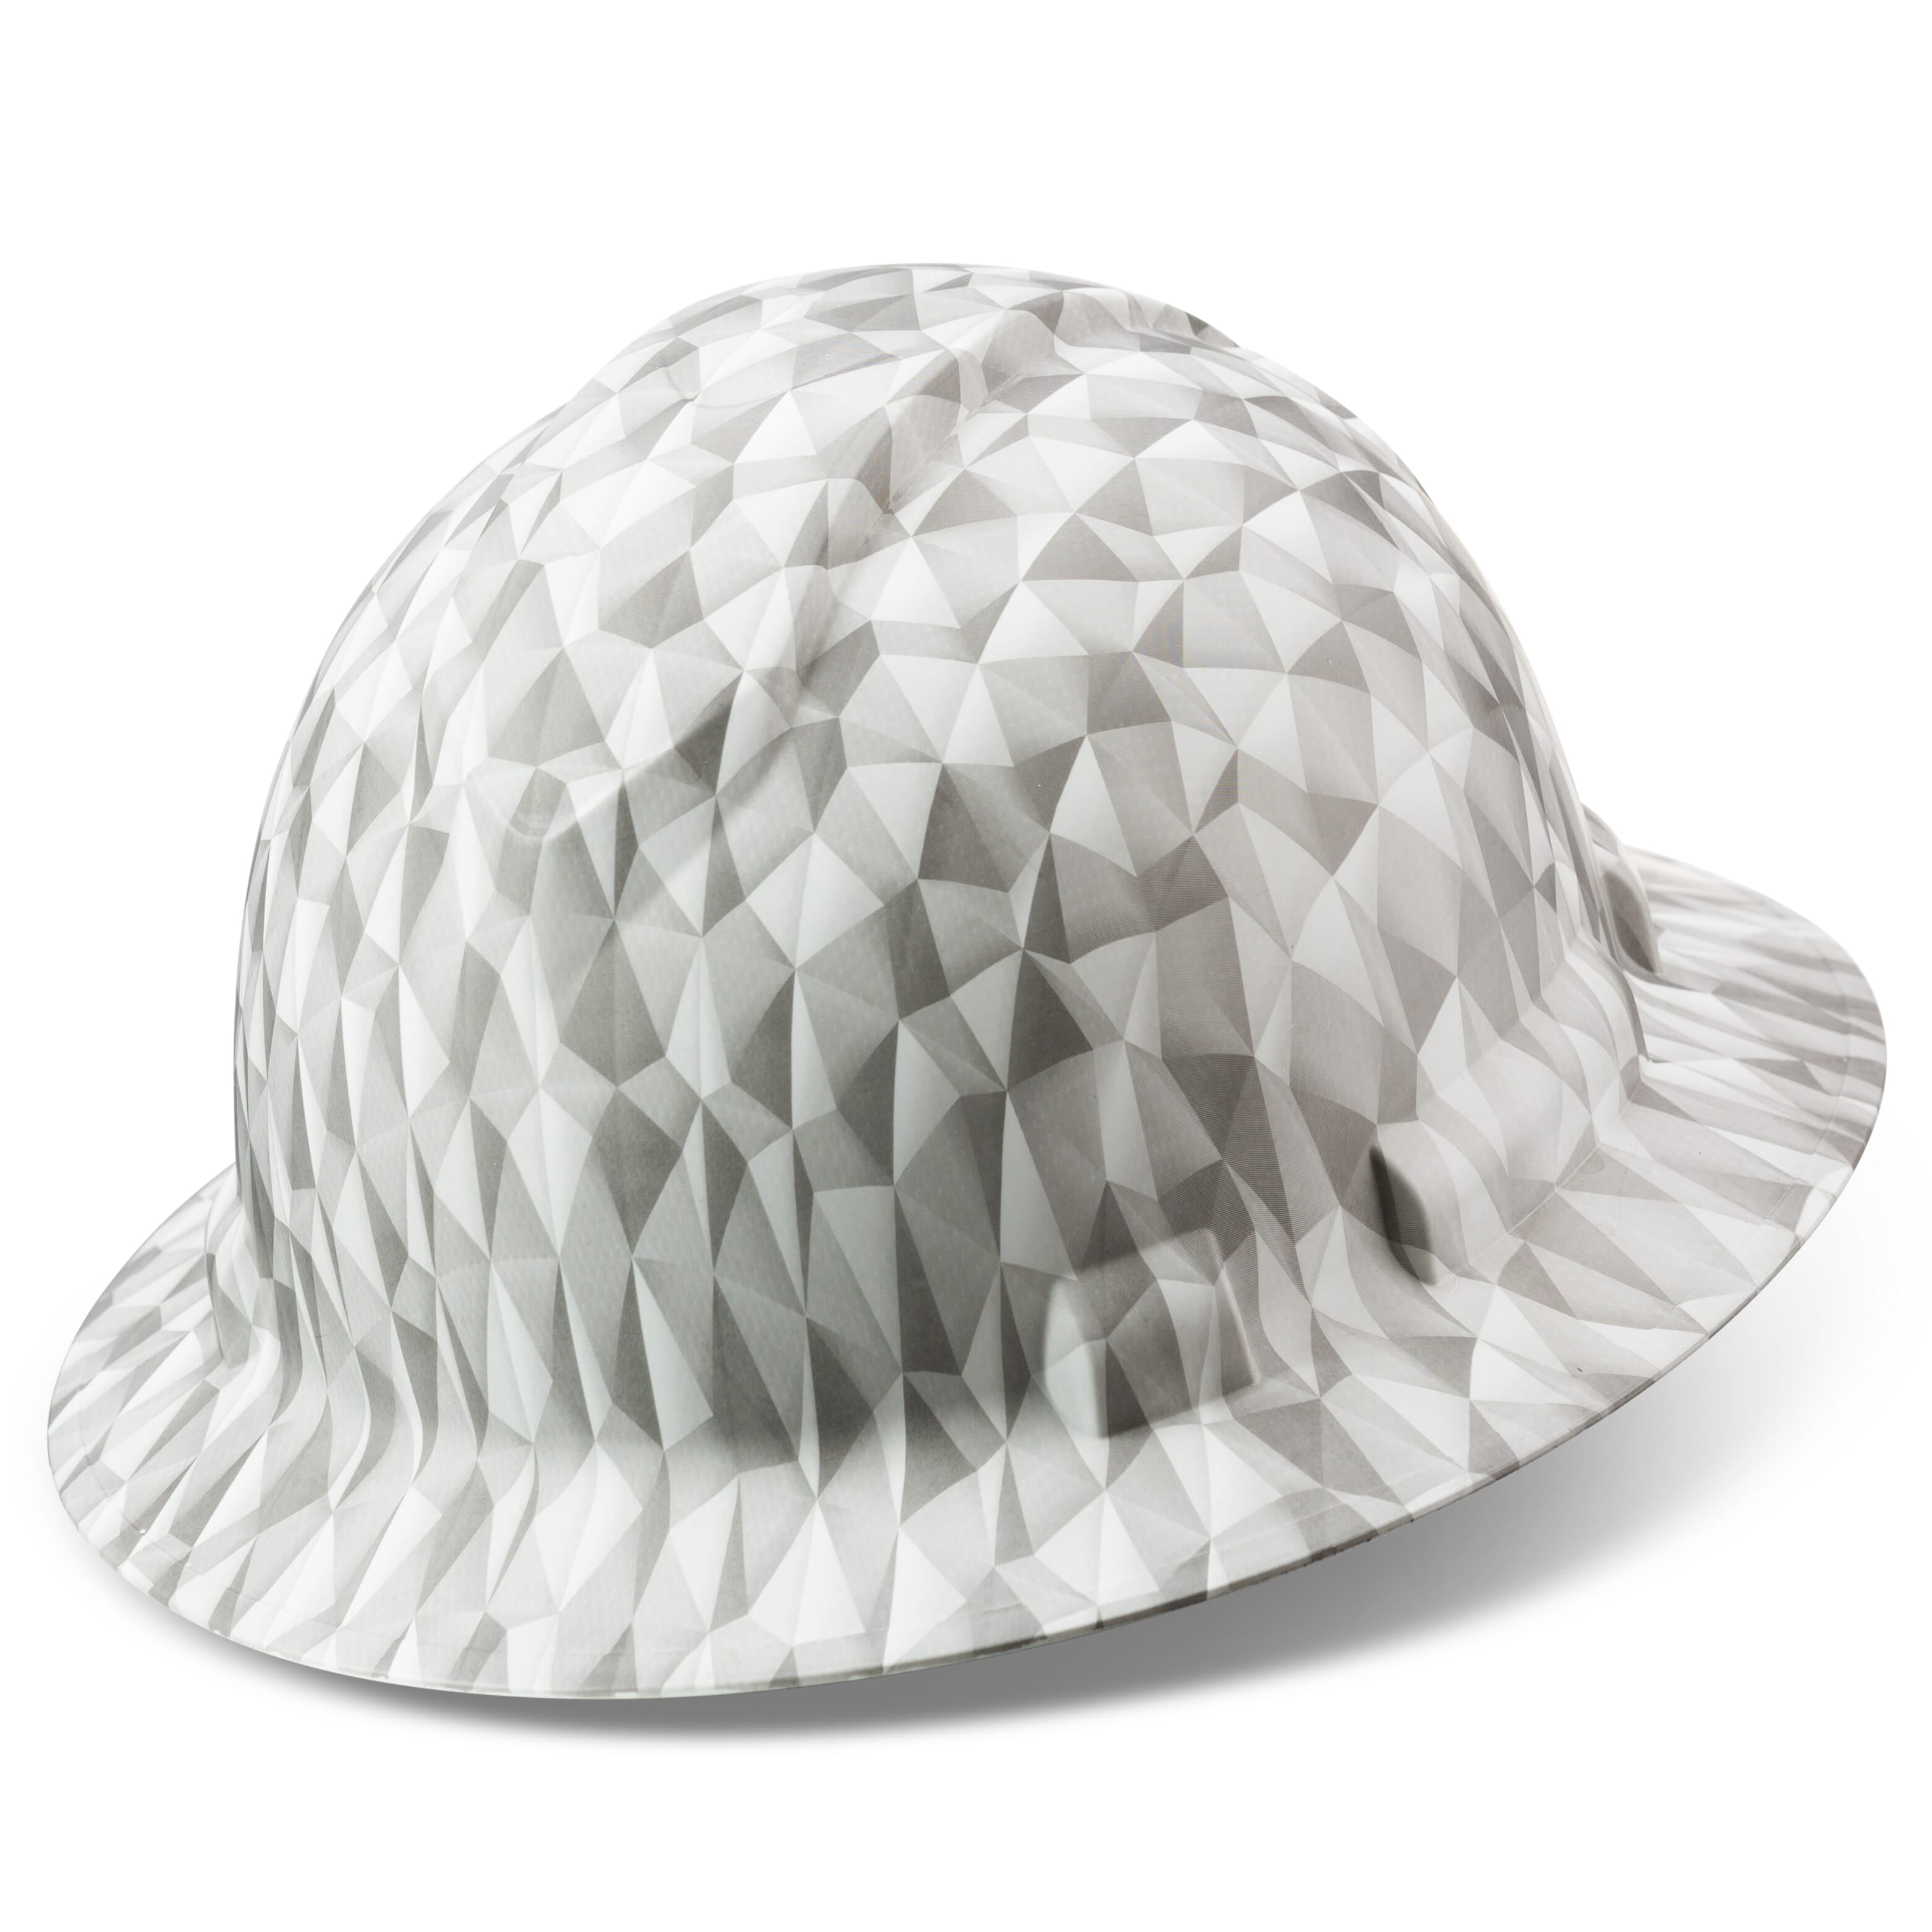 Full Brim Pyramex Hard Hat, Custom Gray Scale Design, Safety Helmet, 6 Point